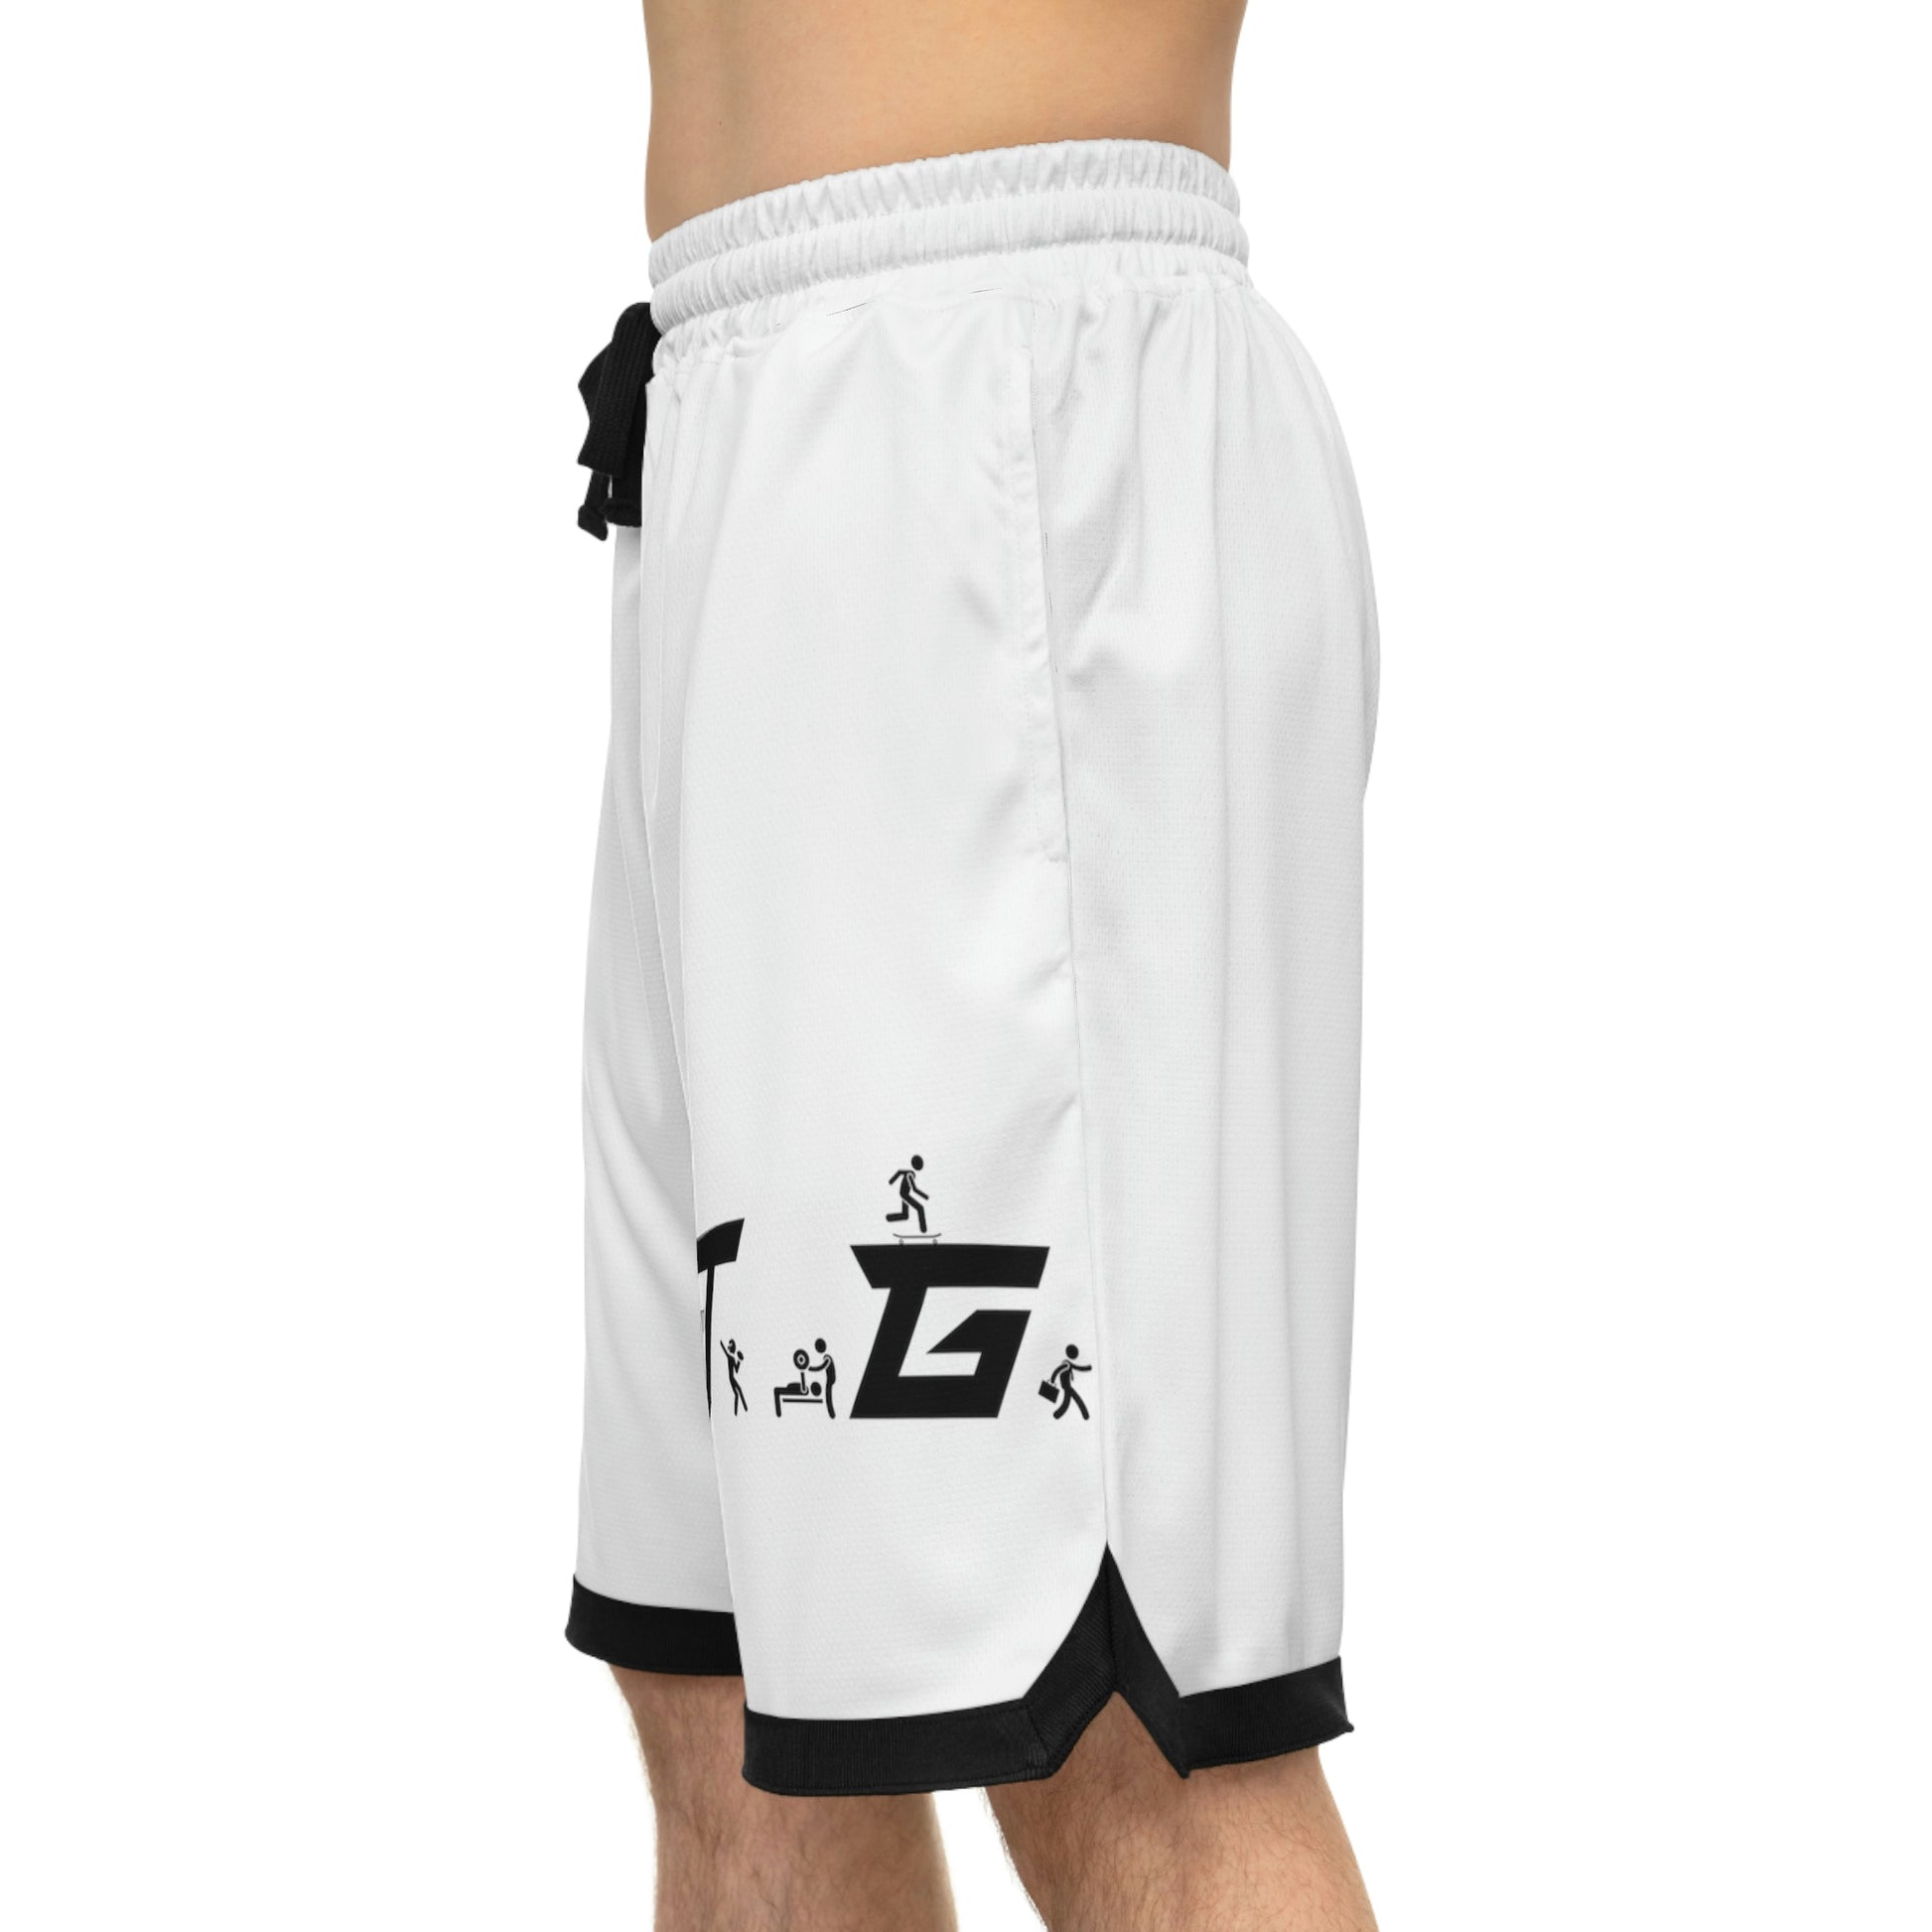 White Ewing Basketball Shorts